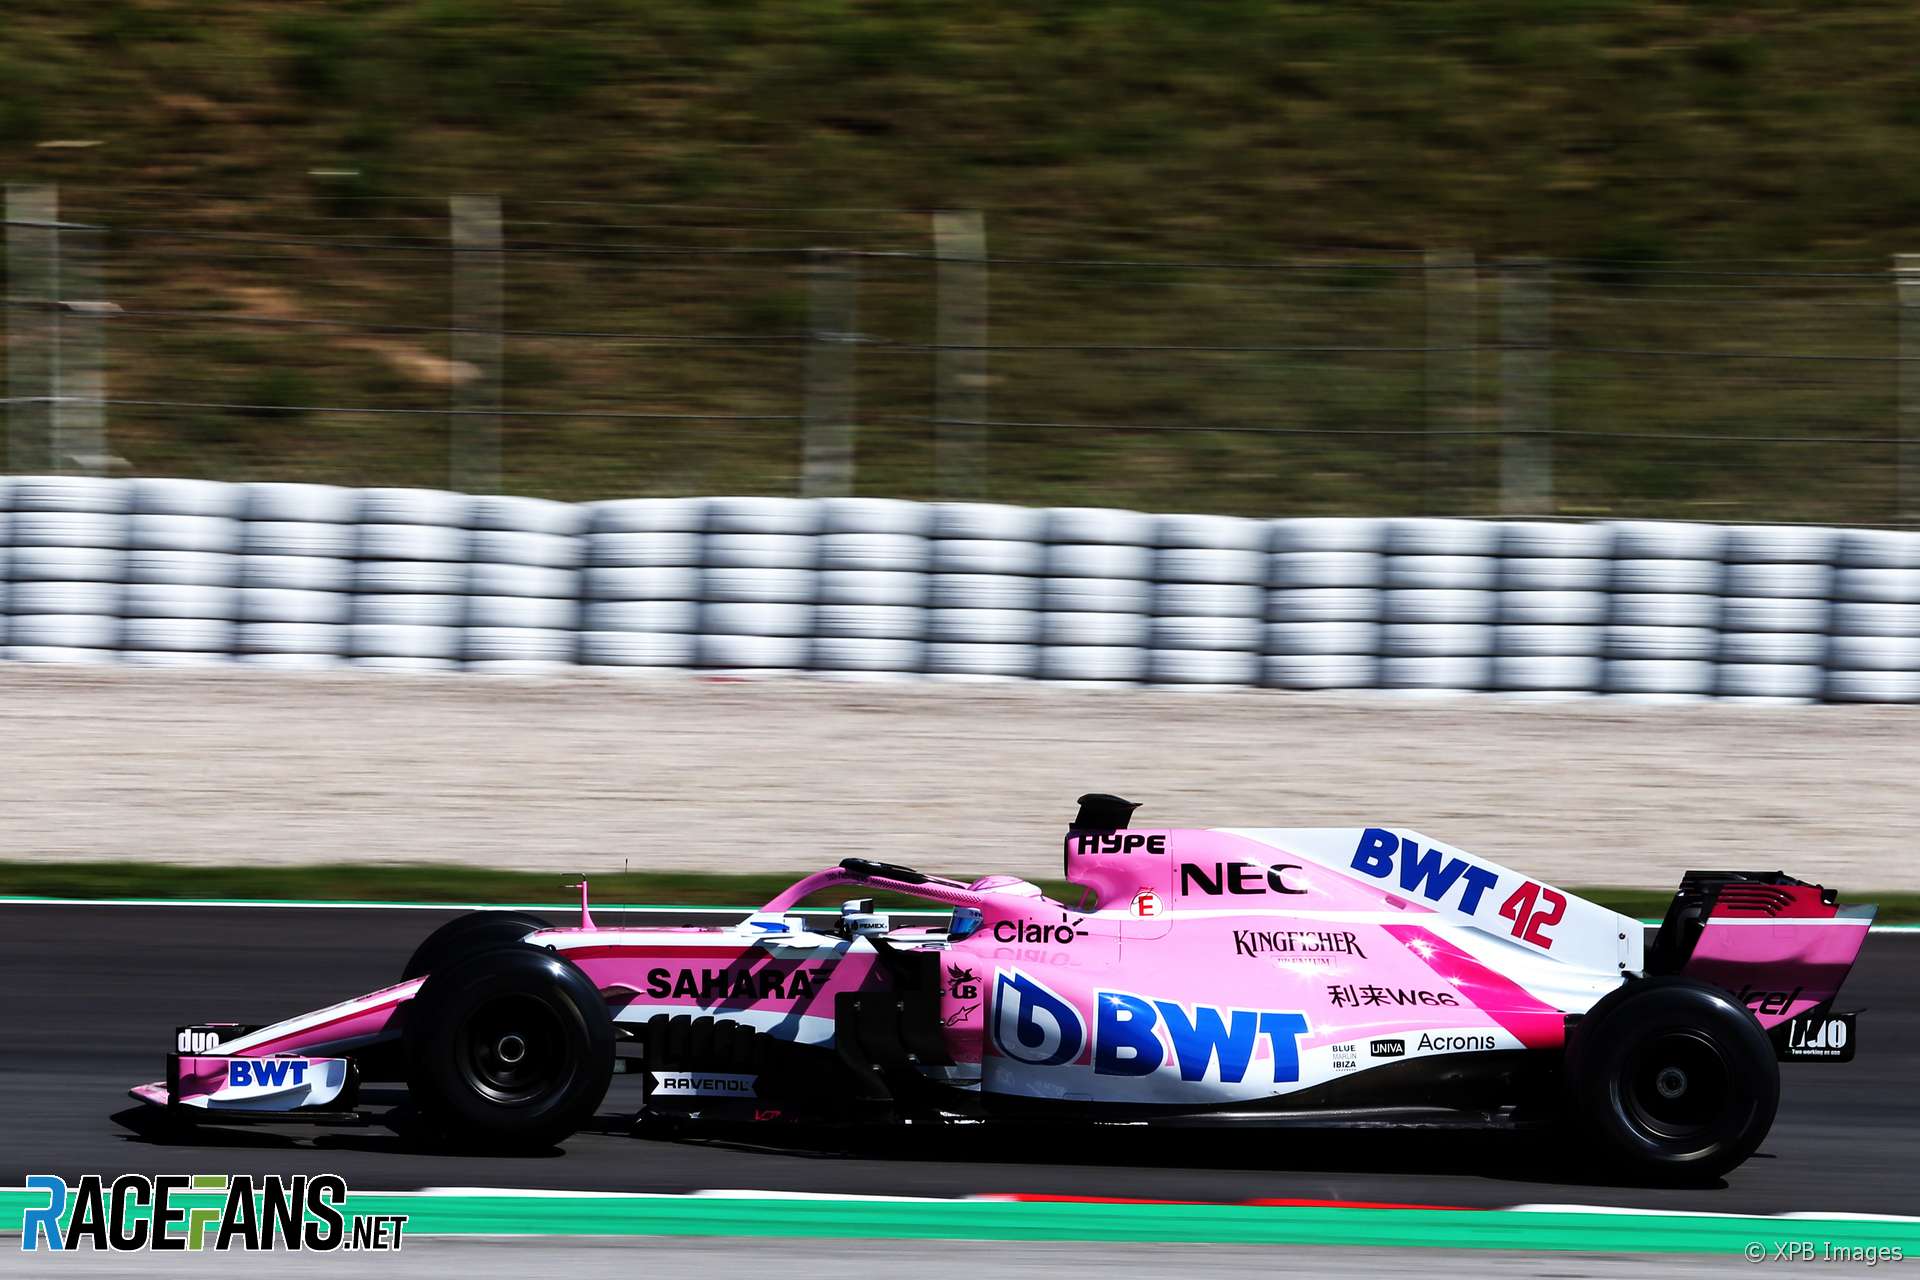 George Russell, Force India, Circuit de Catalunya